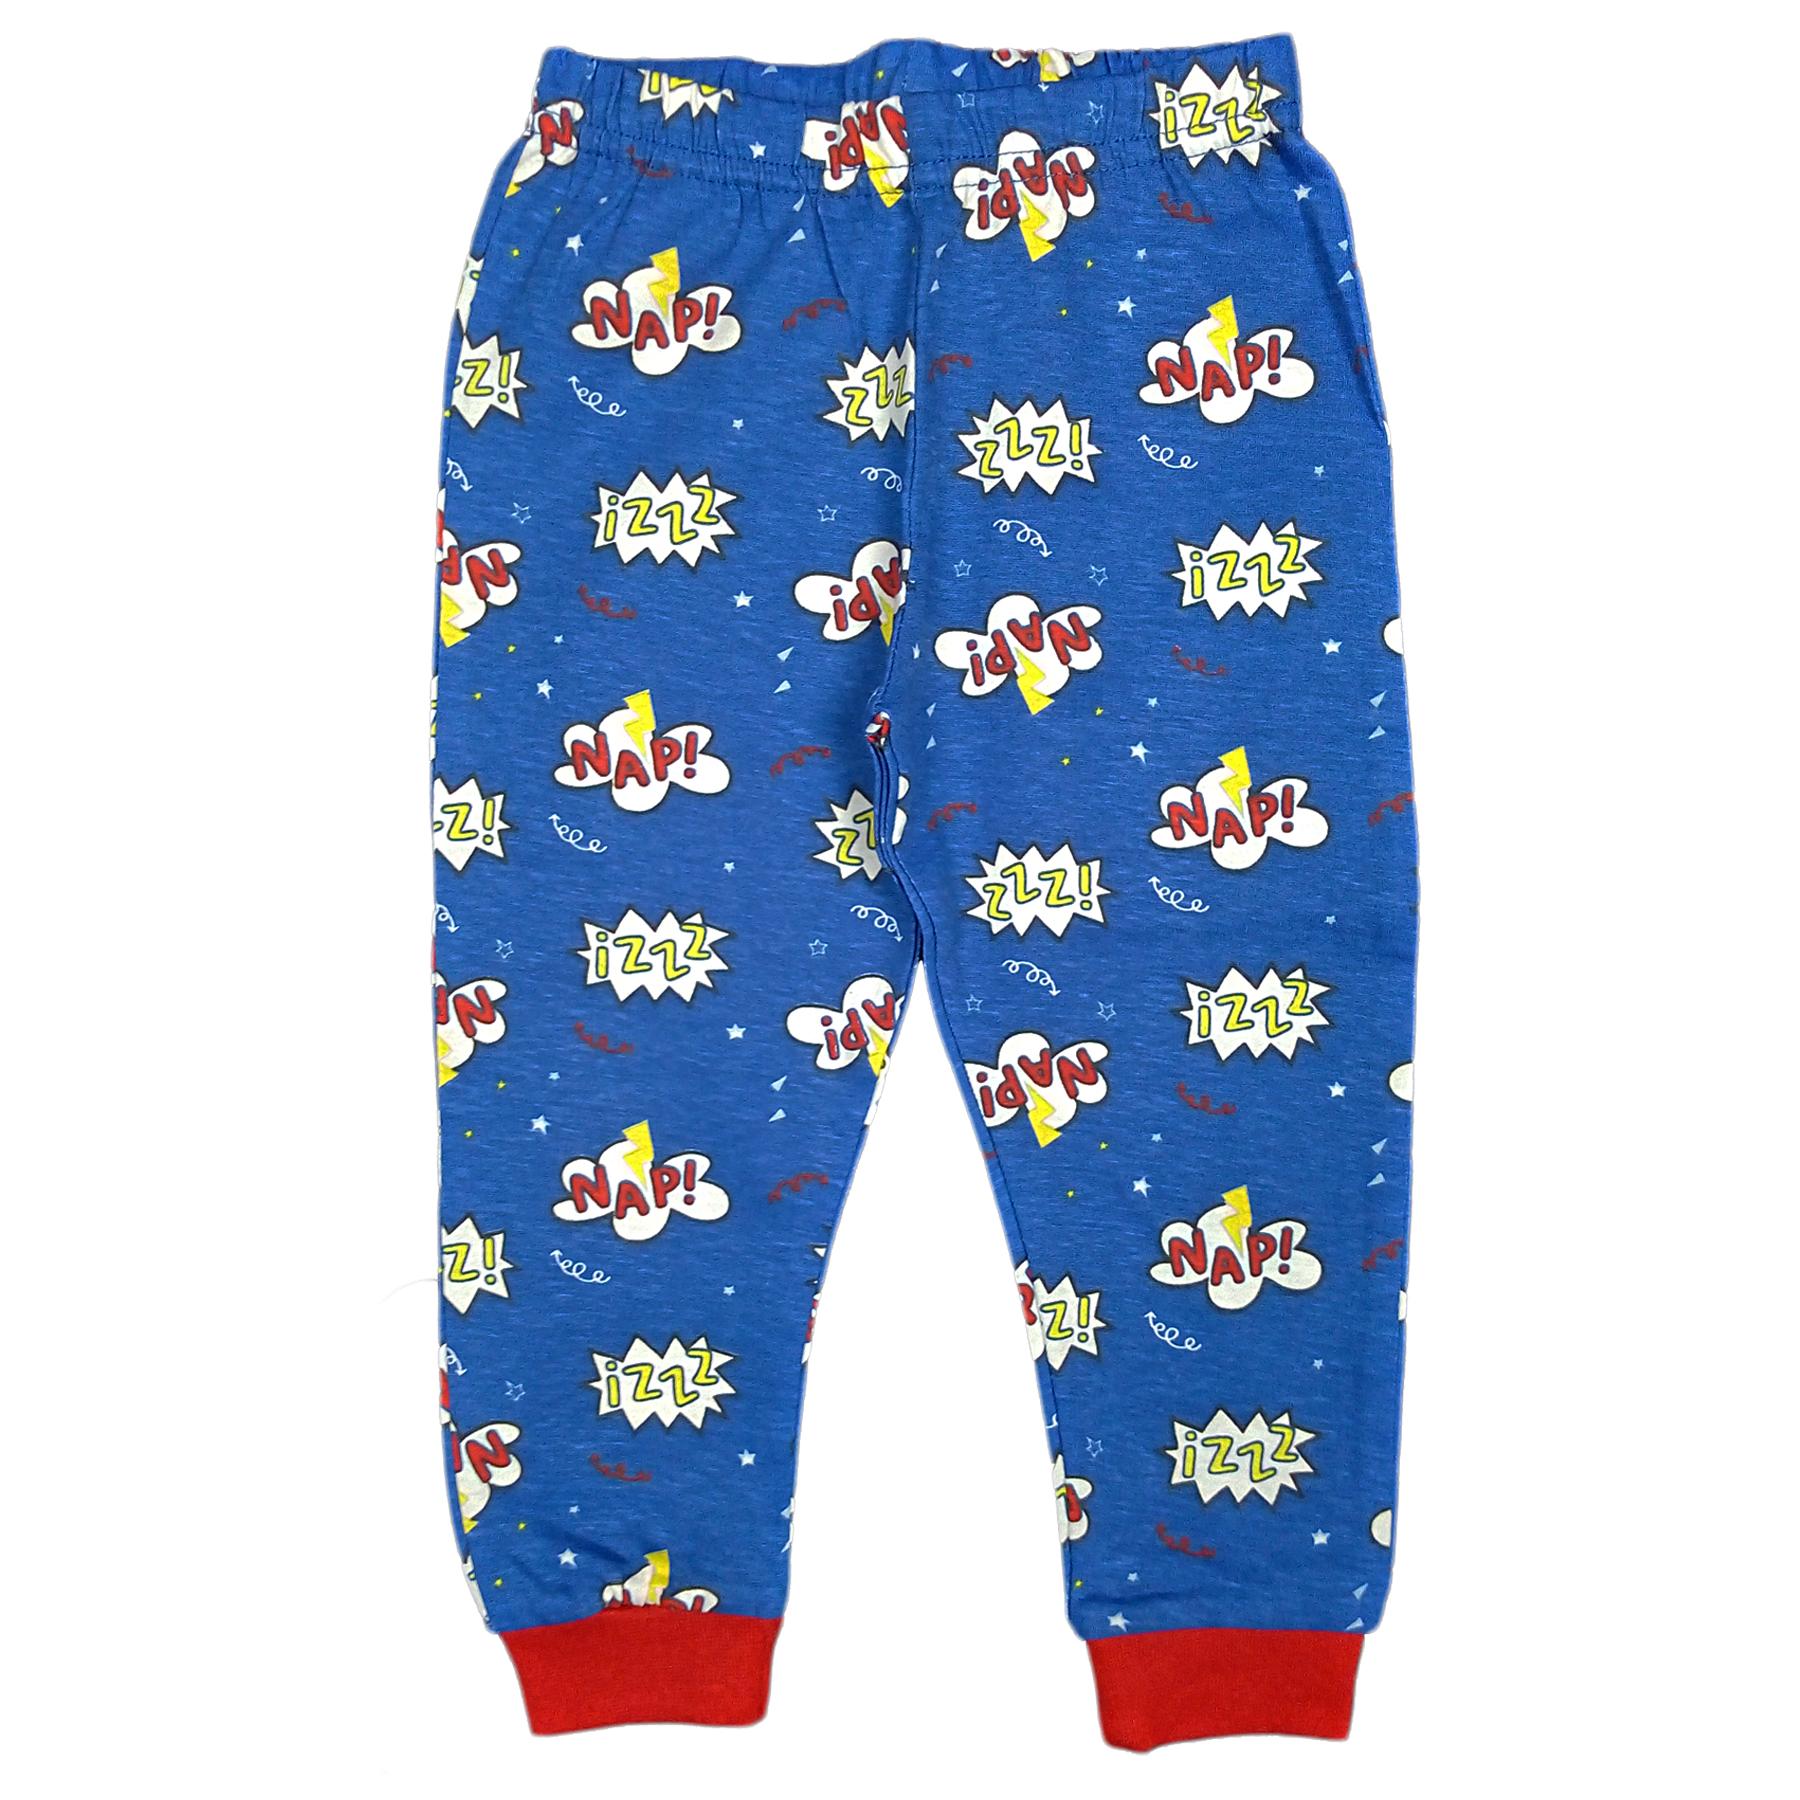 Jam Jam Nap! Superhero Cotton Pyjama Bottoms